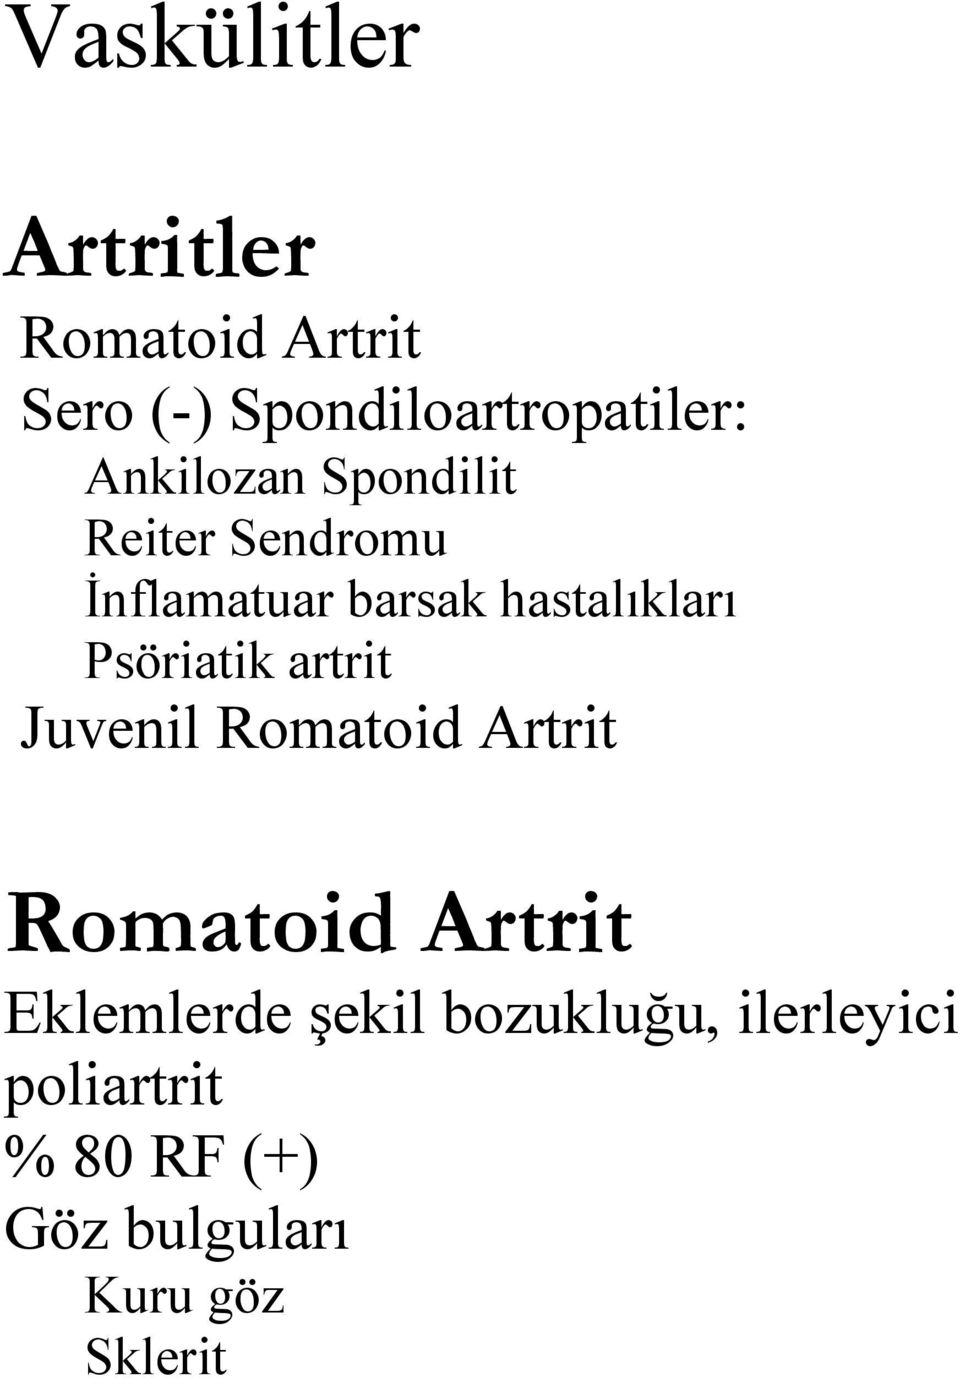 Psöriatik artrit Juvenil Romatoid Artrit Romatoid Artrit Eklemlerde